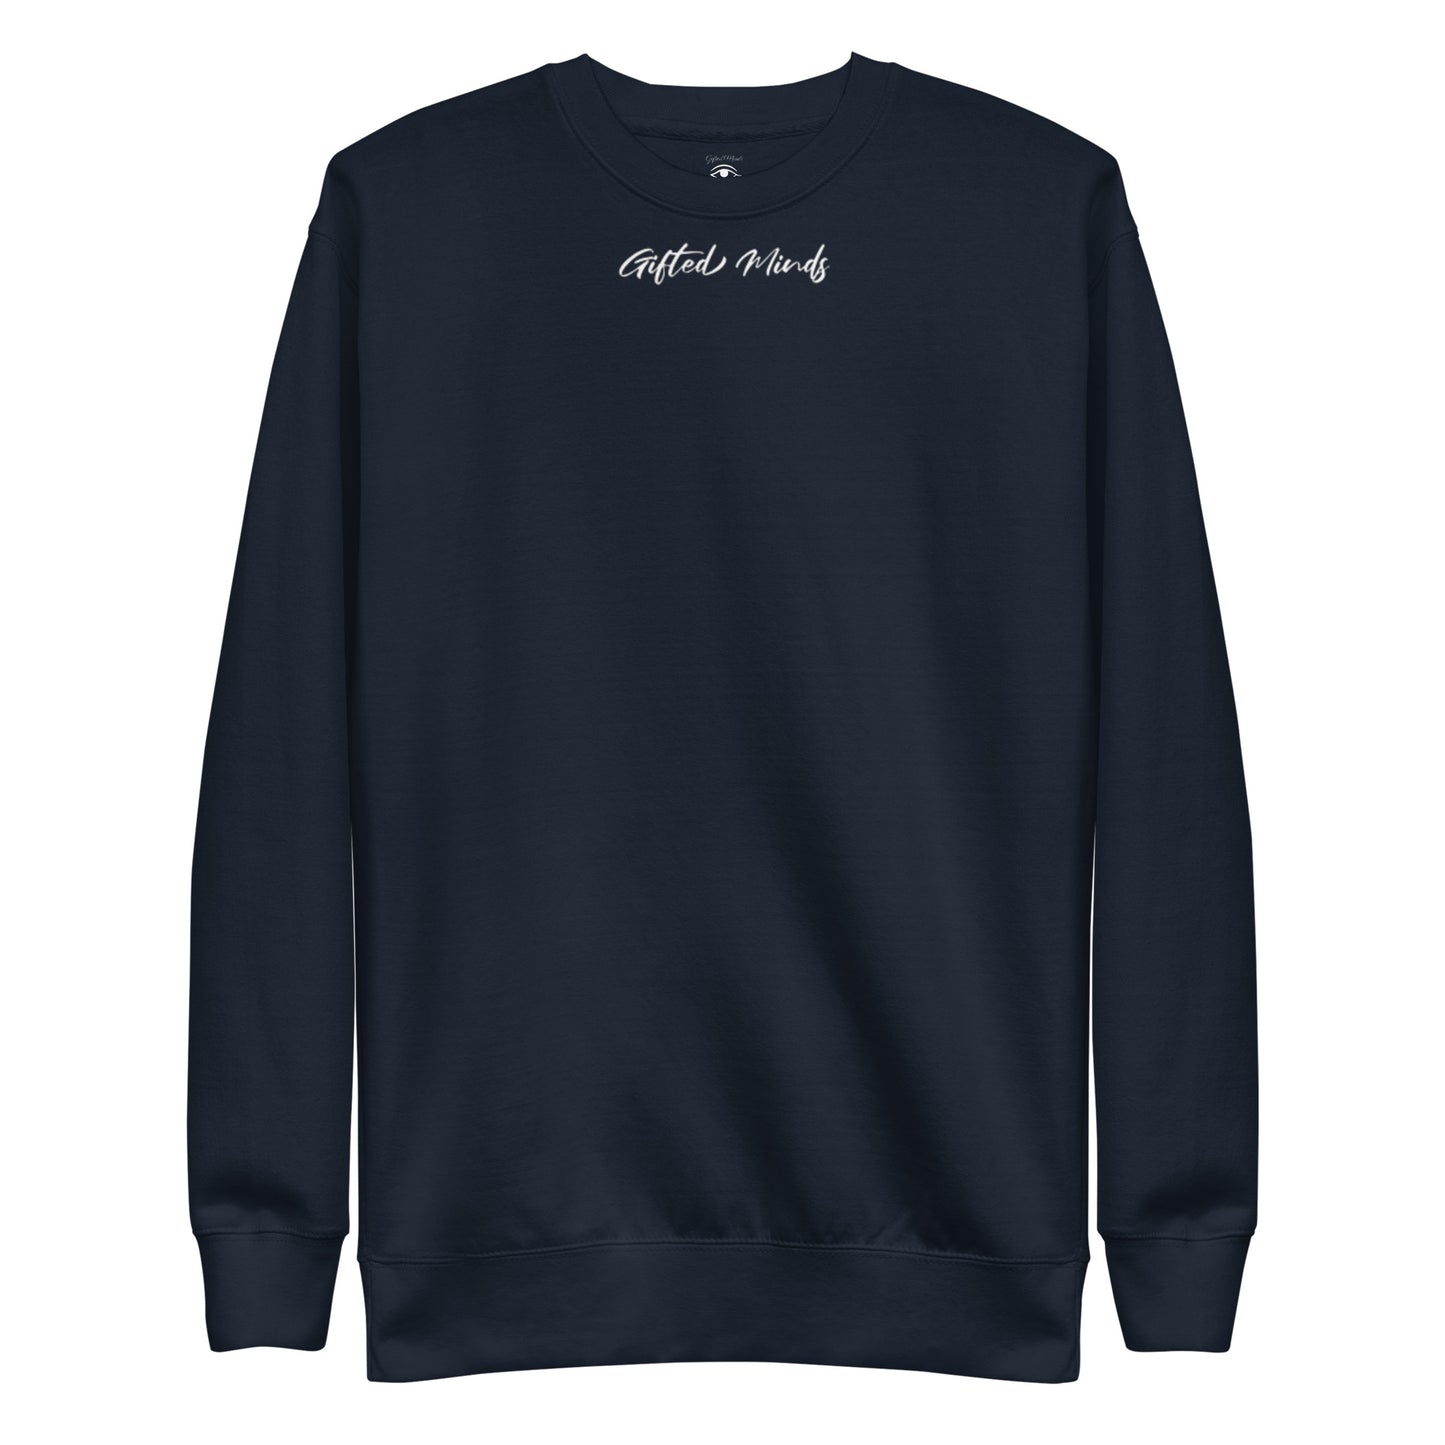 Gifted Minds Premium Sweatshirt - GFTD MNDS